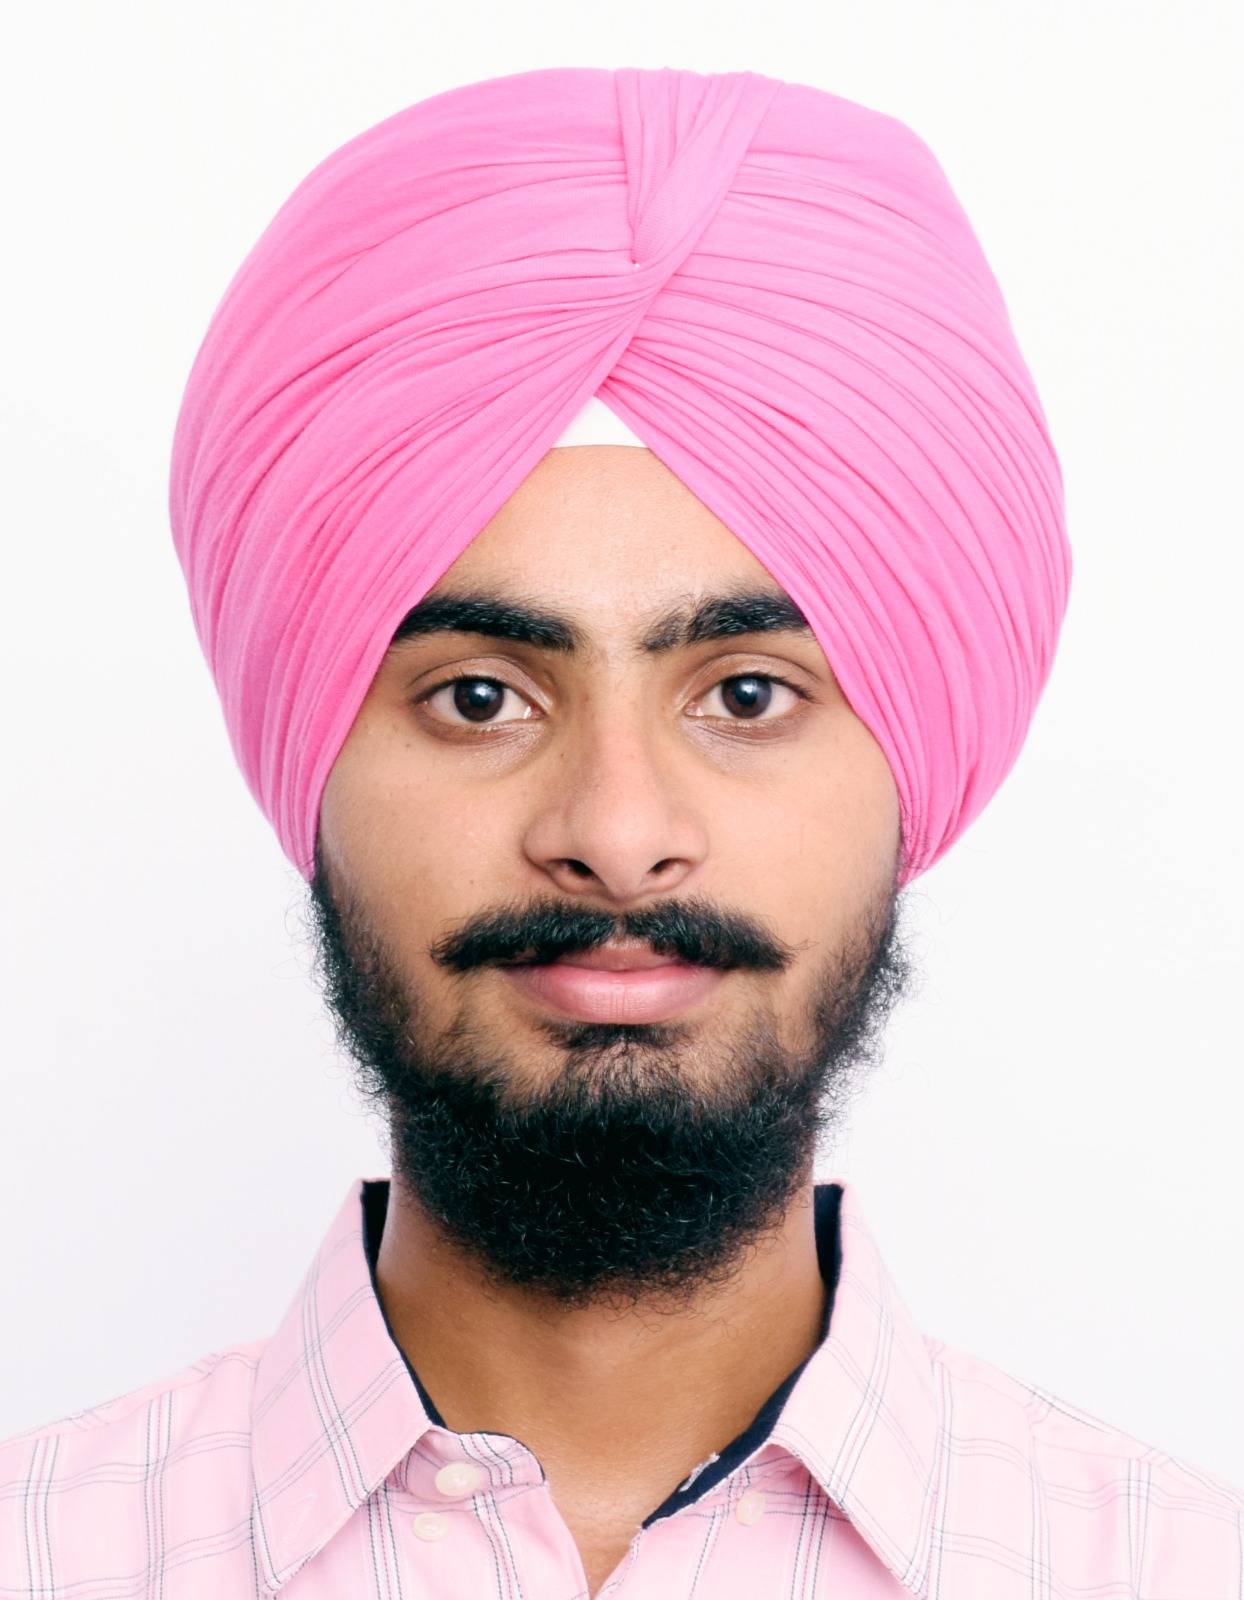 Anmolpreet Singh